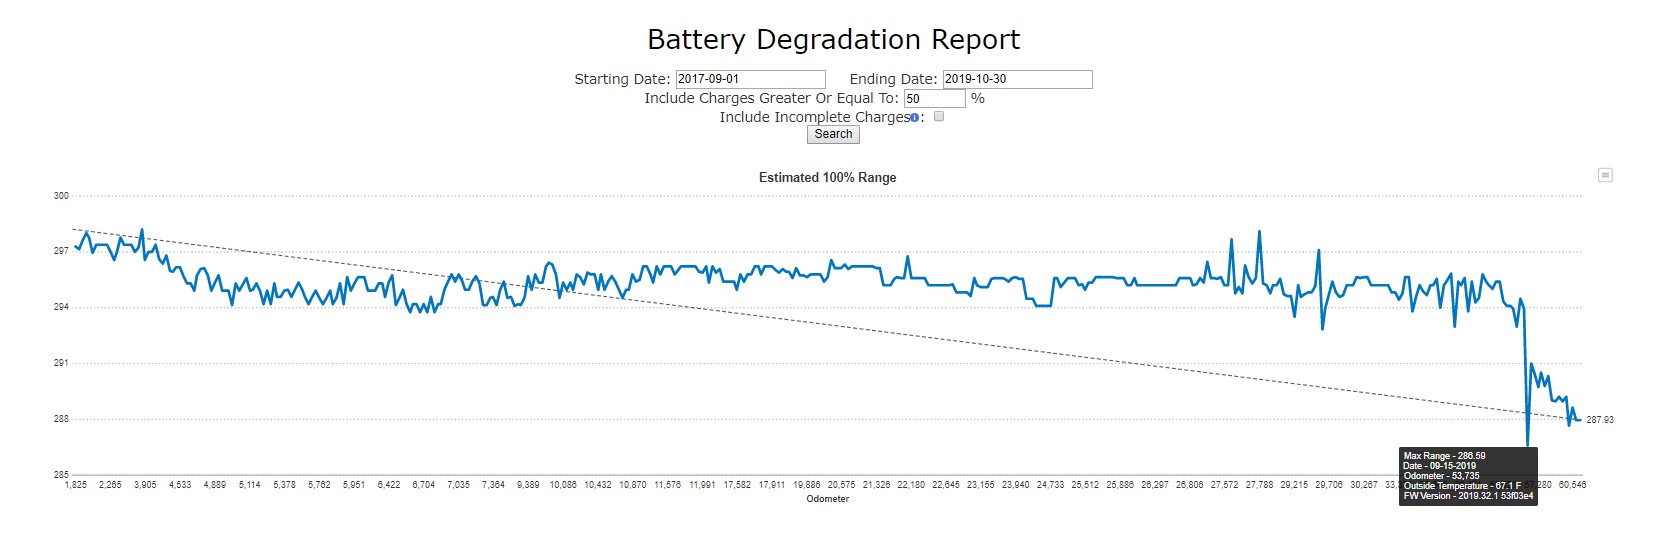 Battery-degradation-report-2019-10-30 171208.jpg